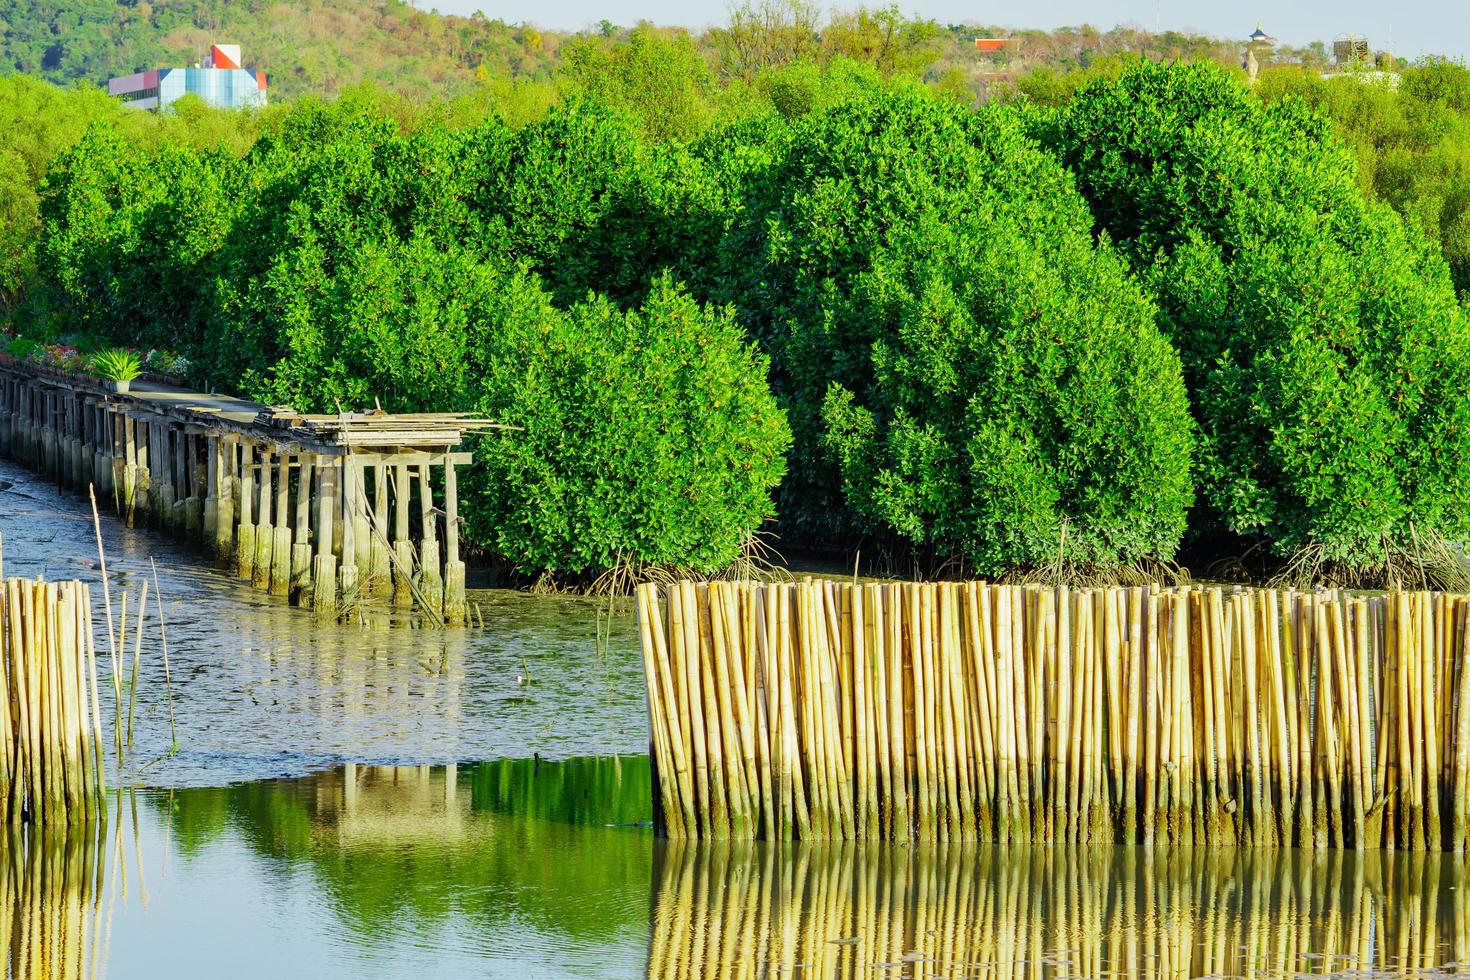 golfbeschermingshek gemaakt van droog bamboe in mangrovebos in de zee om kusterosie te voorkomen foto